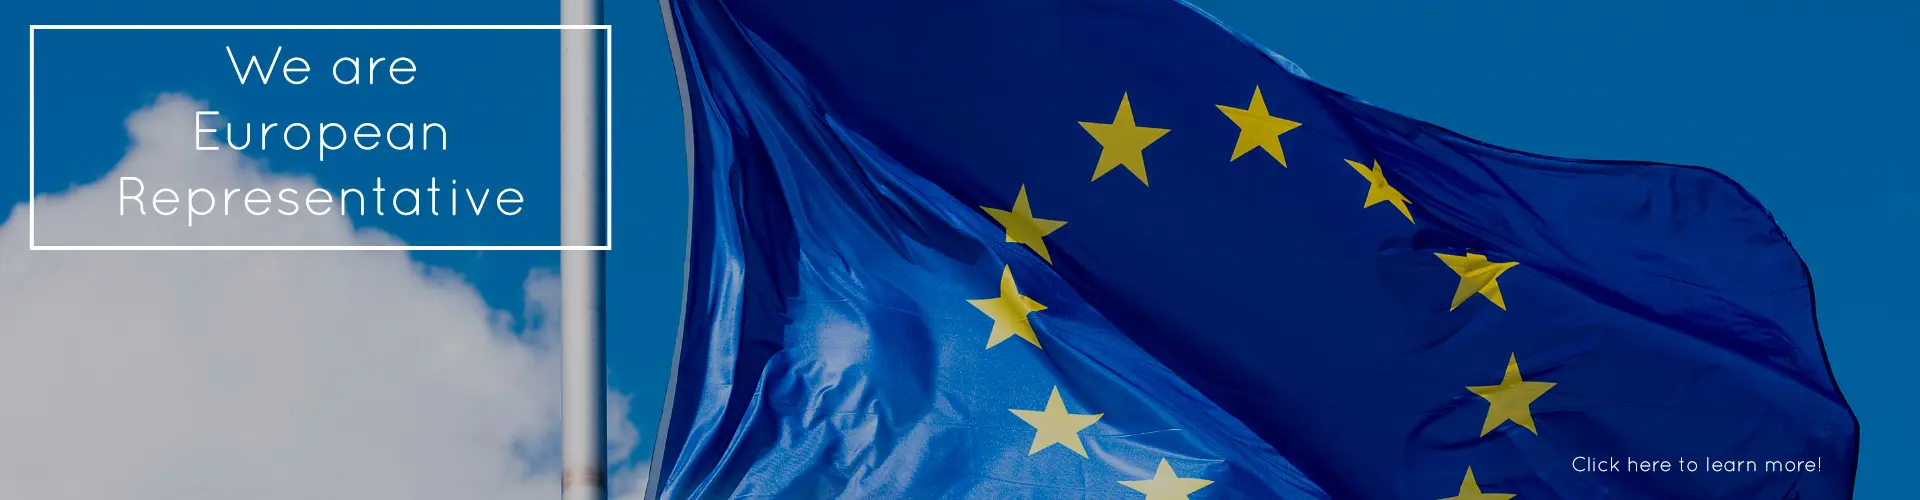 we are eruopean representative EUROPEAN FLAG